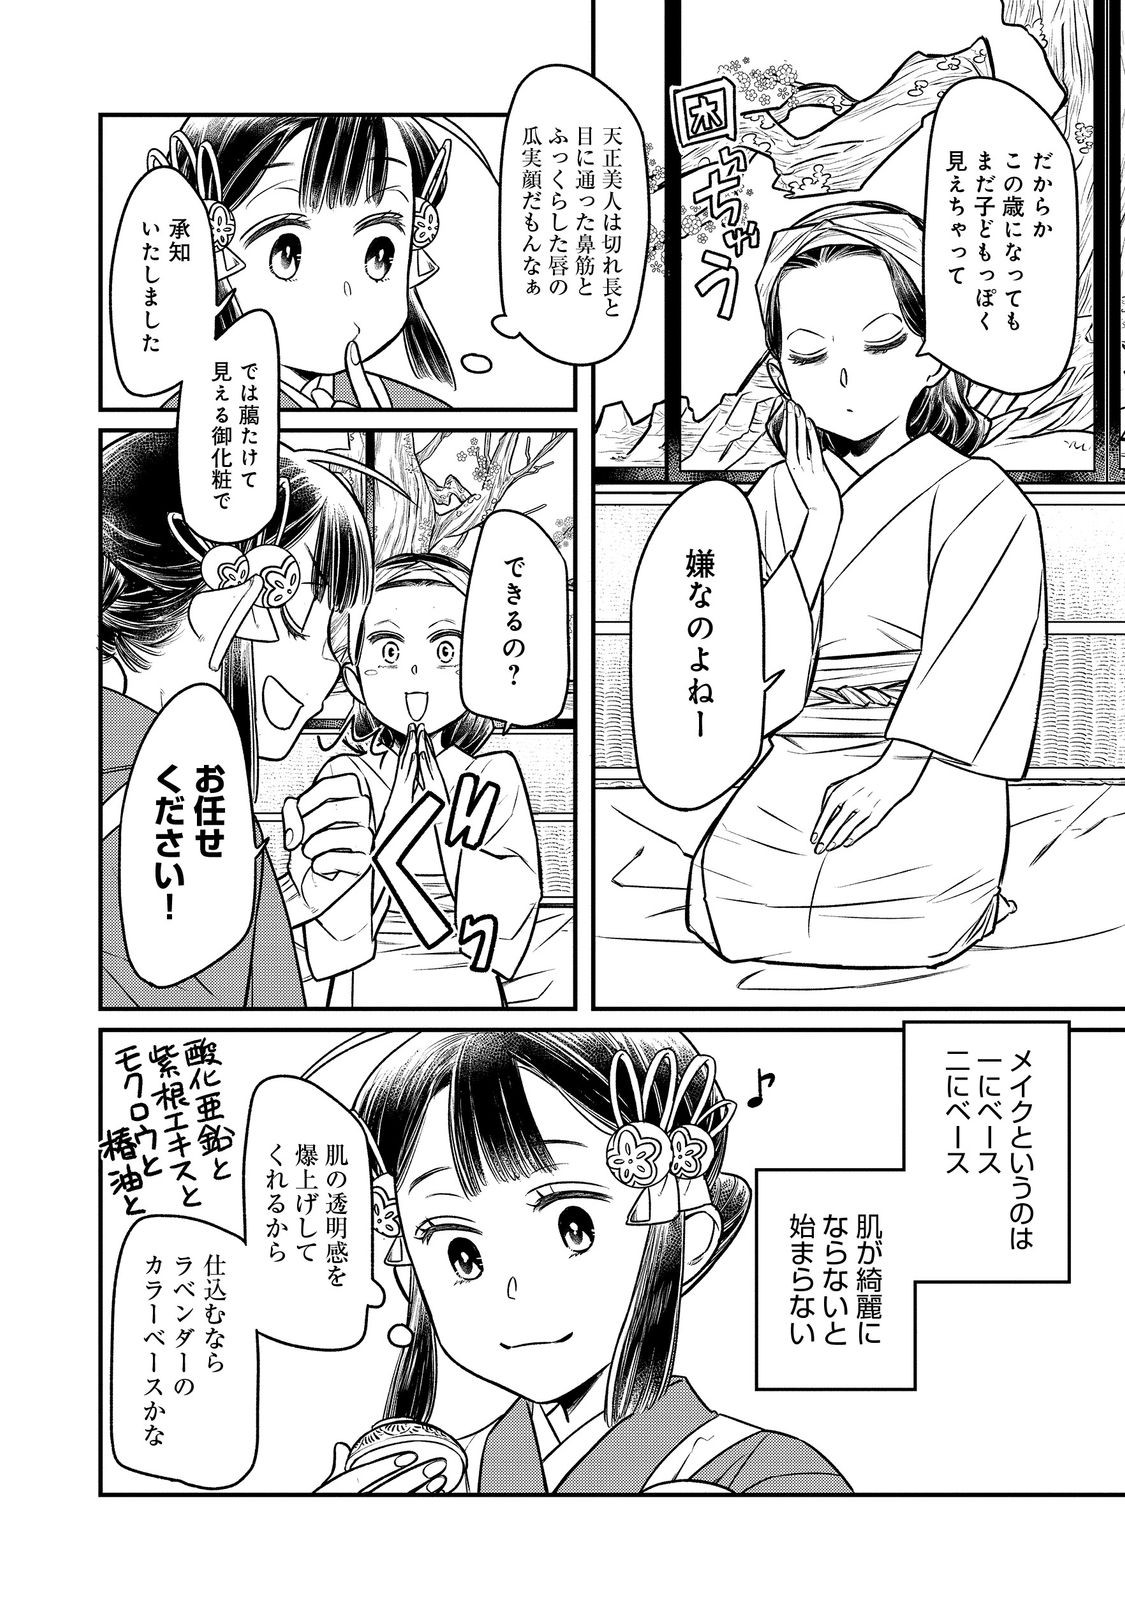 Kitanomandokoro-sama no Okeshougakari - Chapter 10.2 - Page 3